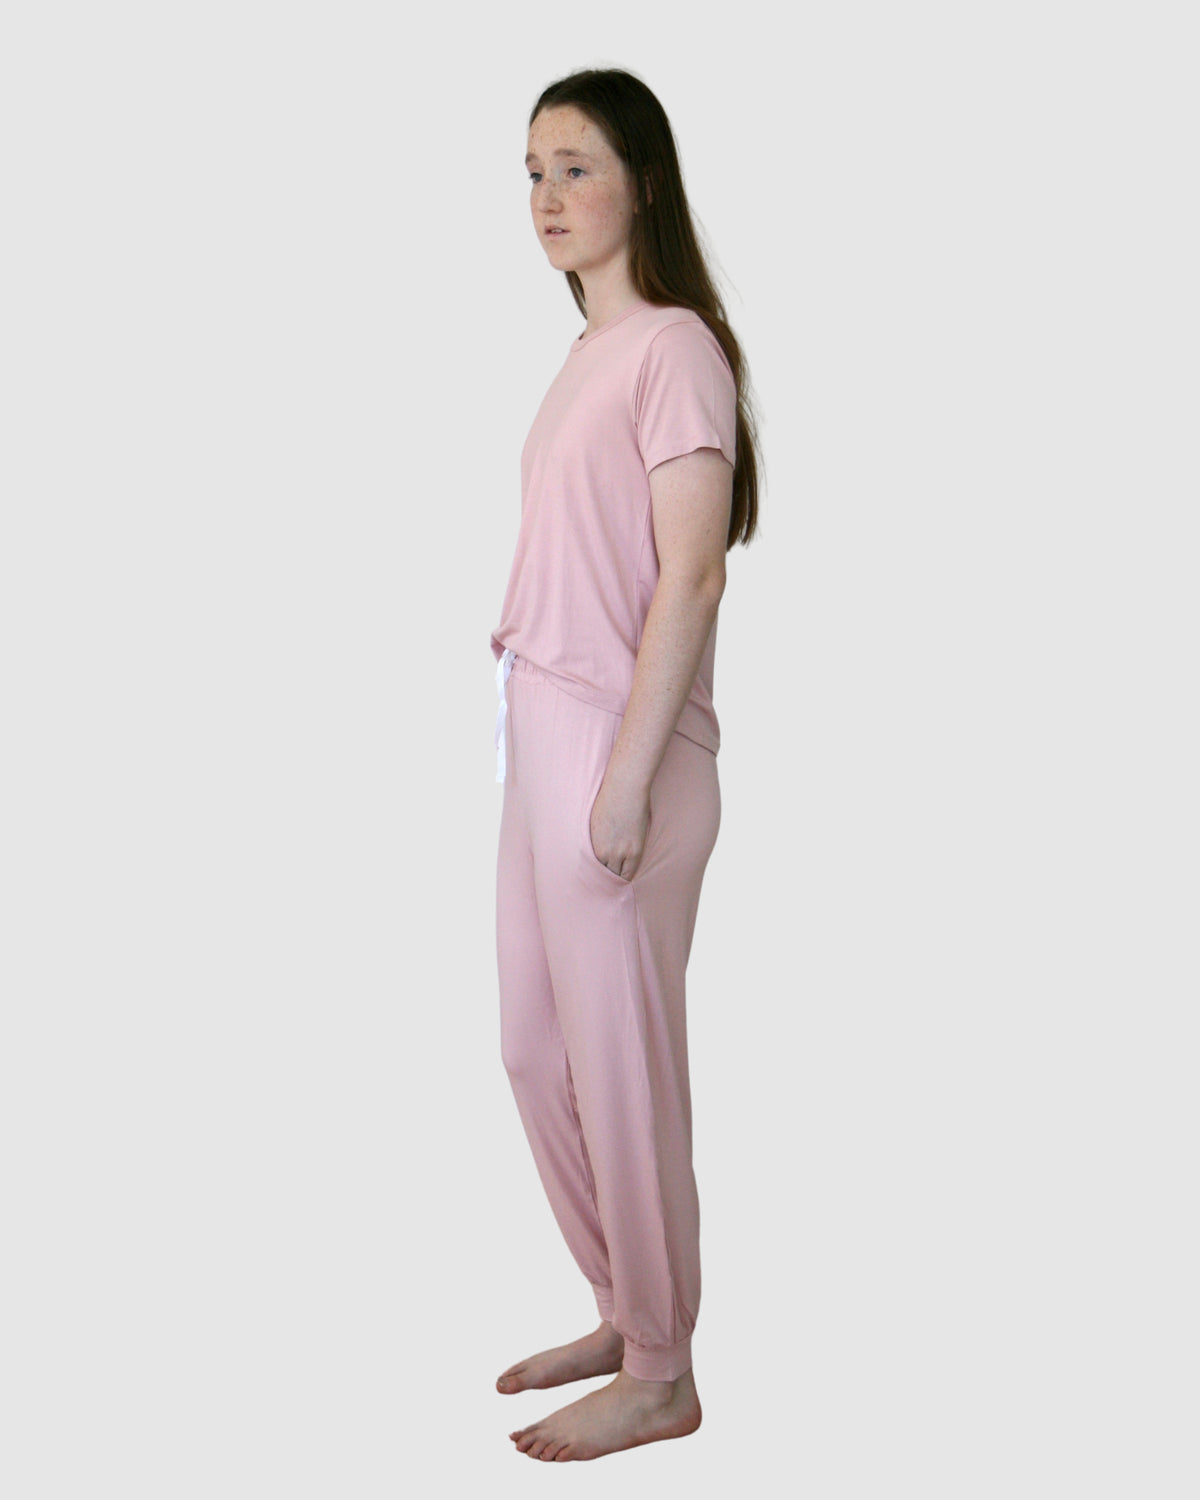 pink teen girls pyjamas set long pants and short sleeve top by Love Haidee Australia side